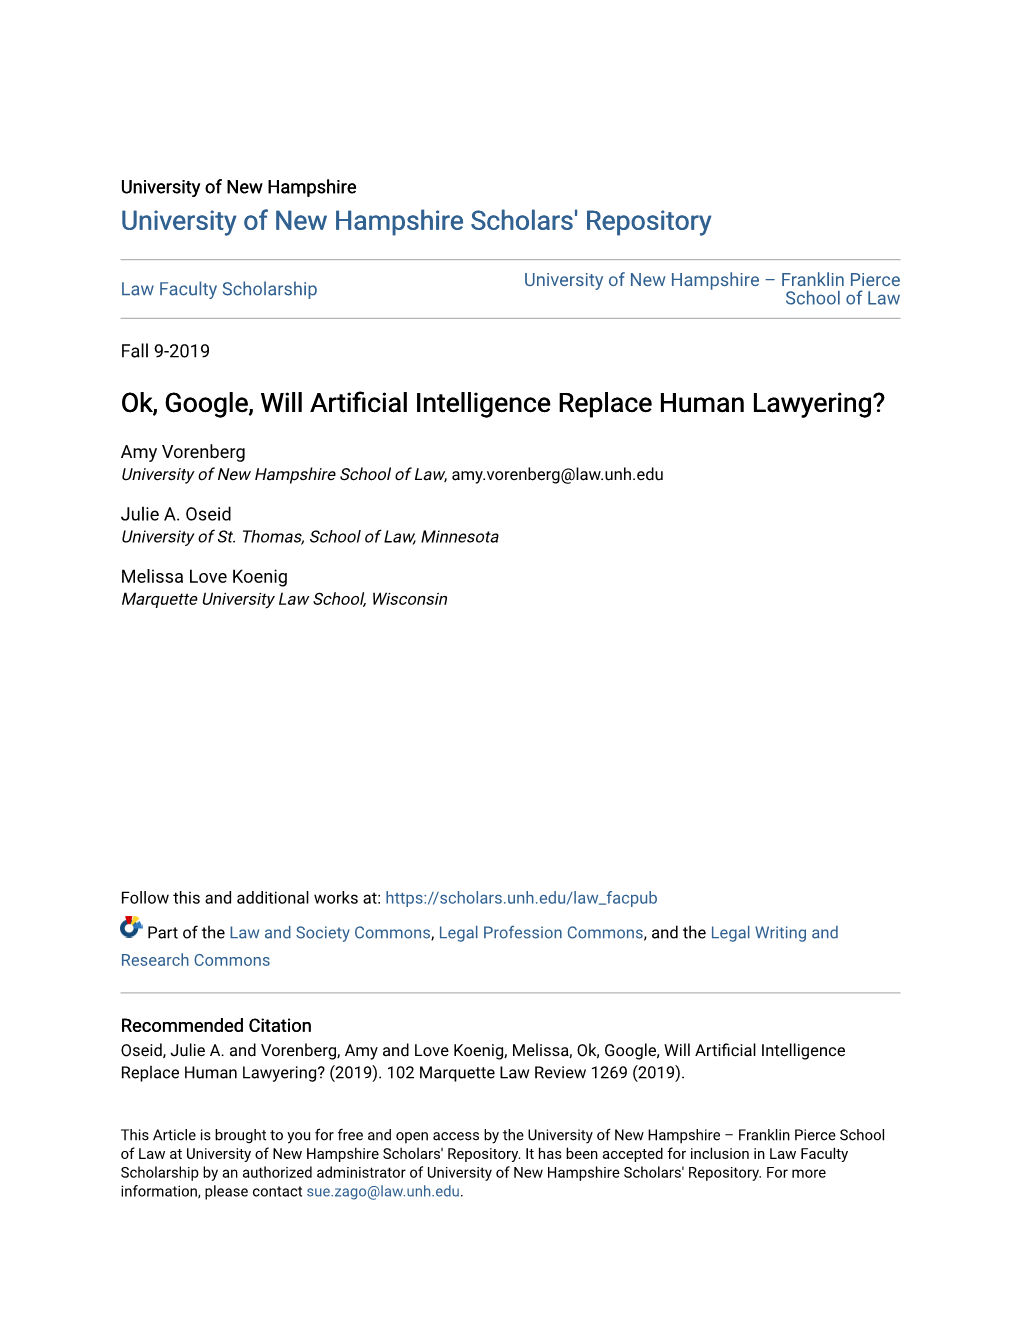 Ok, Google, Will Artificial Intelligence Replace Human Lawyering?